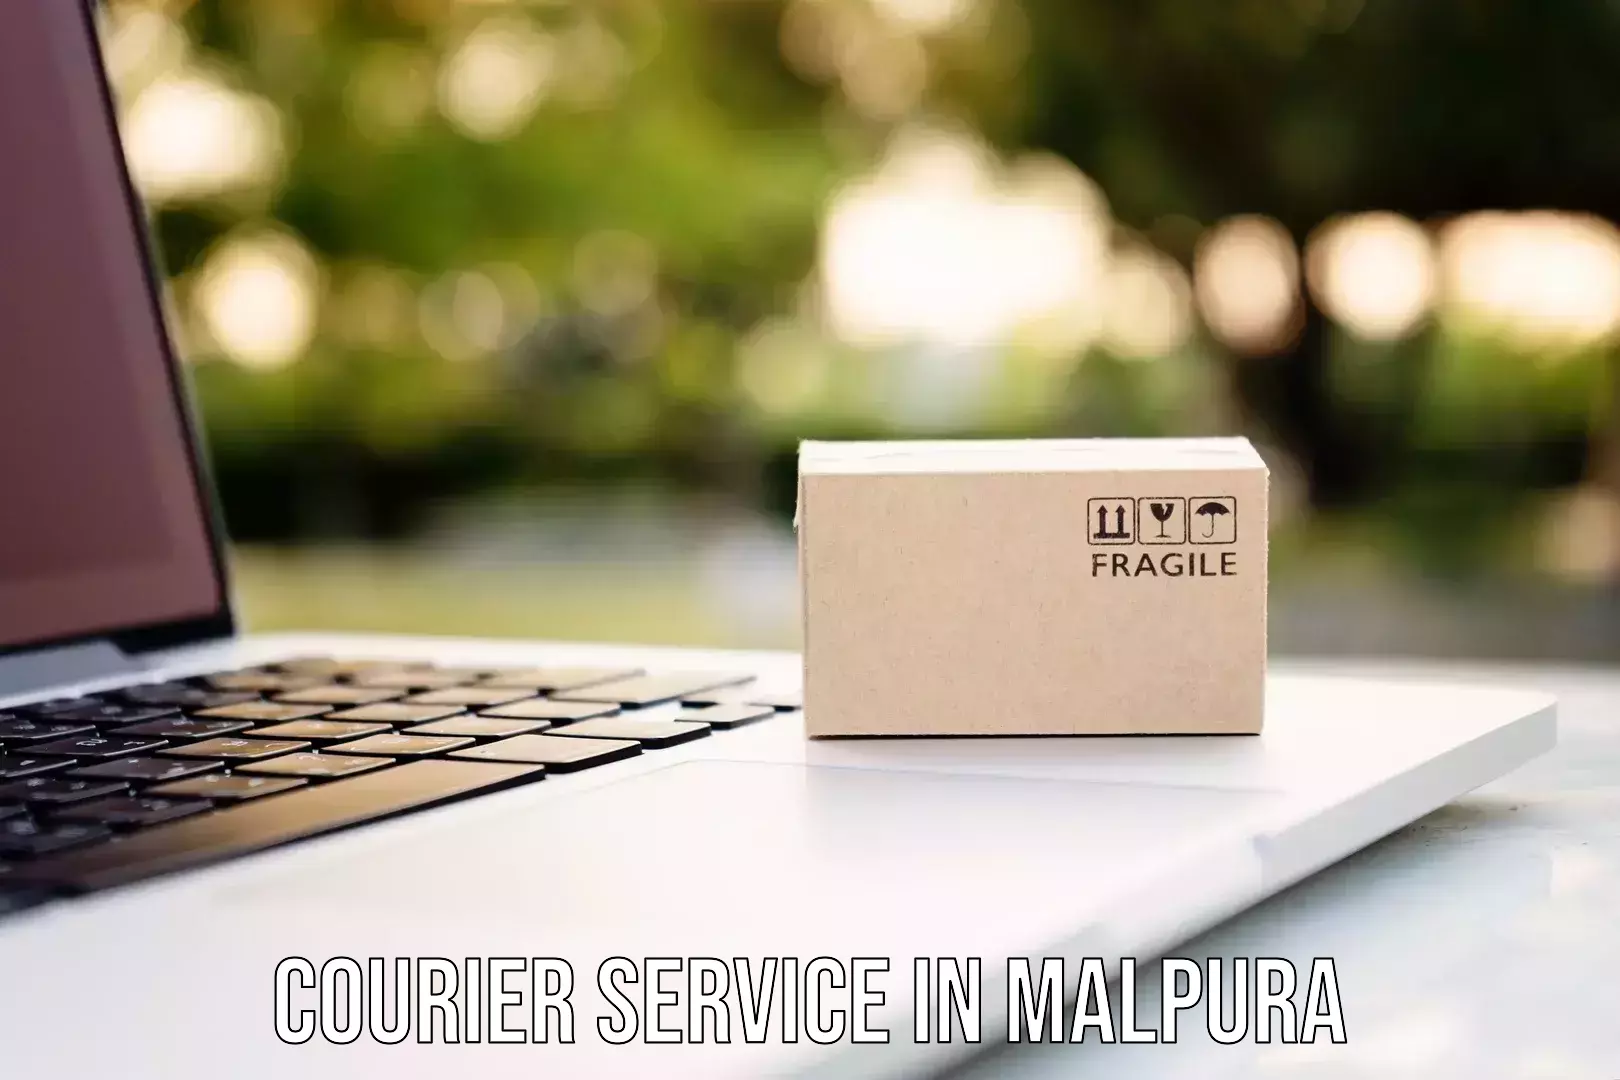 Customer-focused courier in Malpura